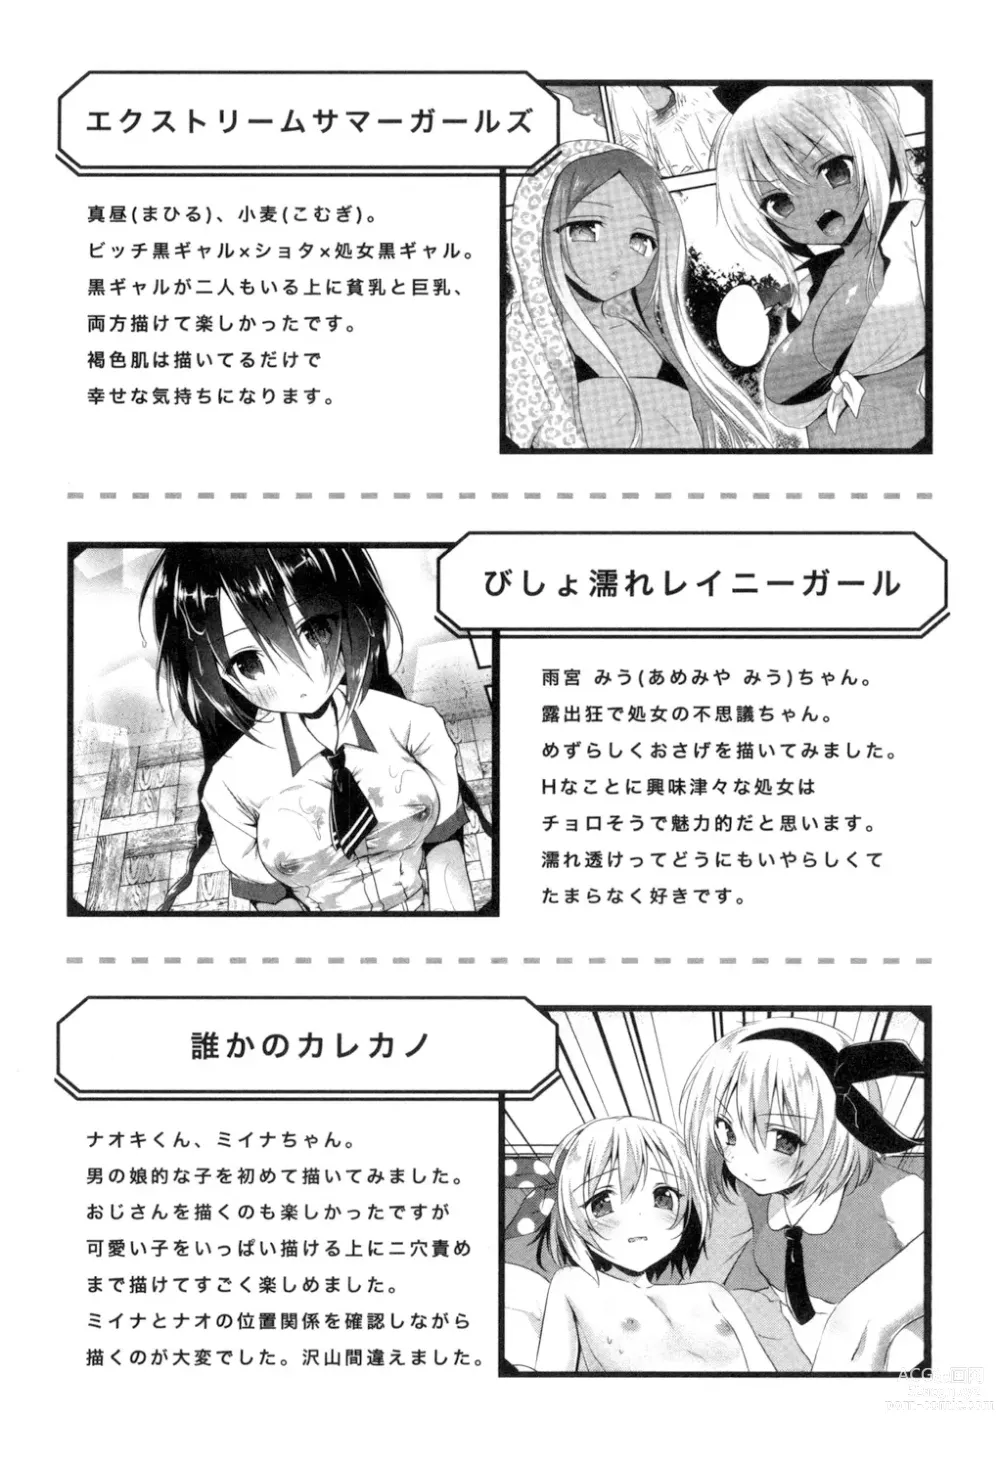 Page 192 of manga Mannaka Namaiki